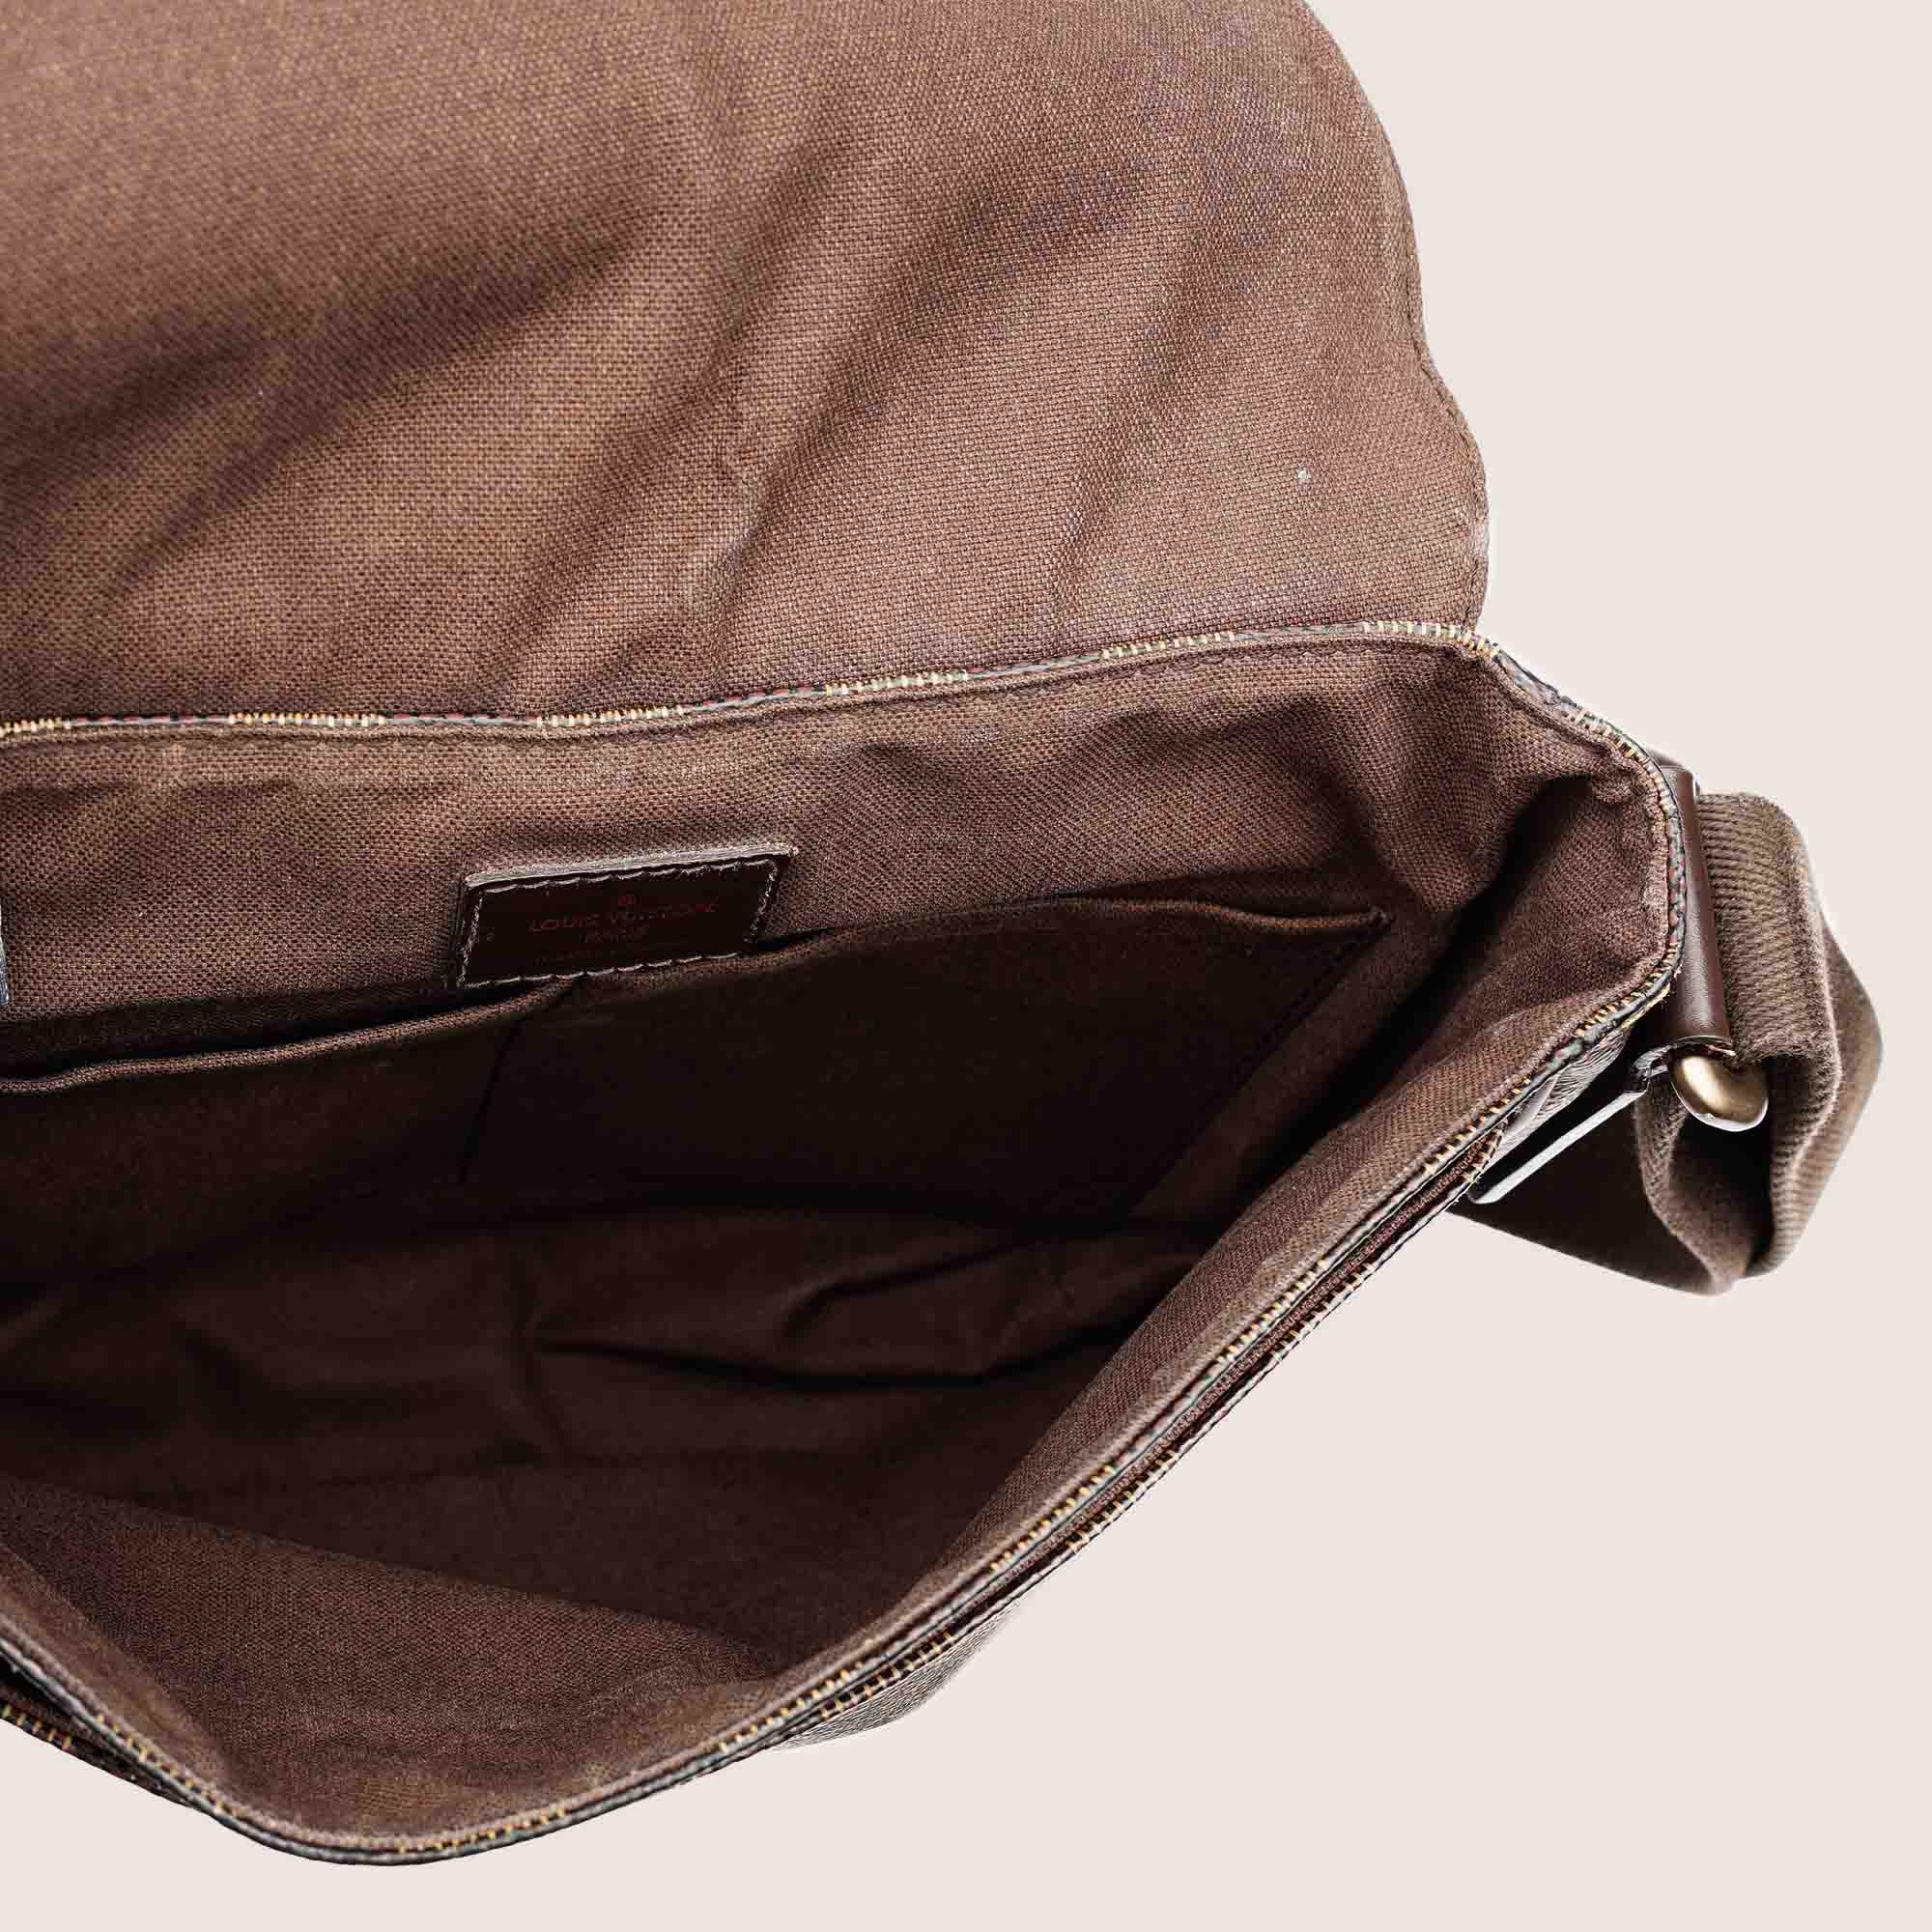 District Messenger Bag PM - LOUIS VUITTON - Affordable Luxury image